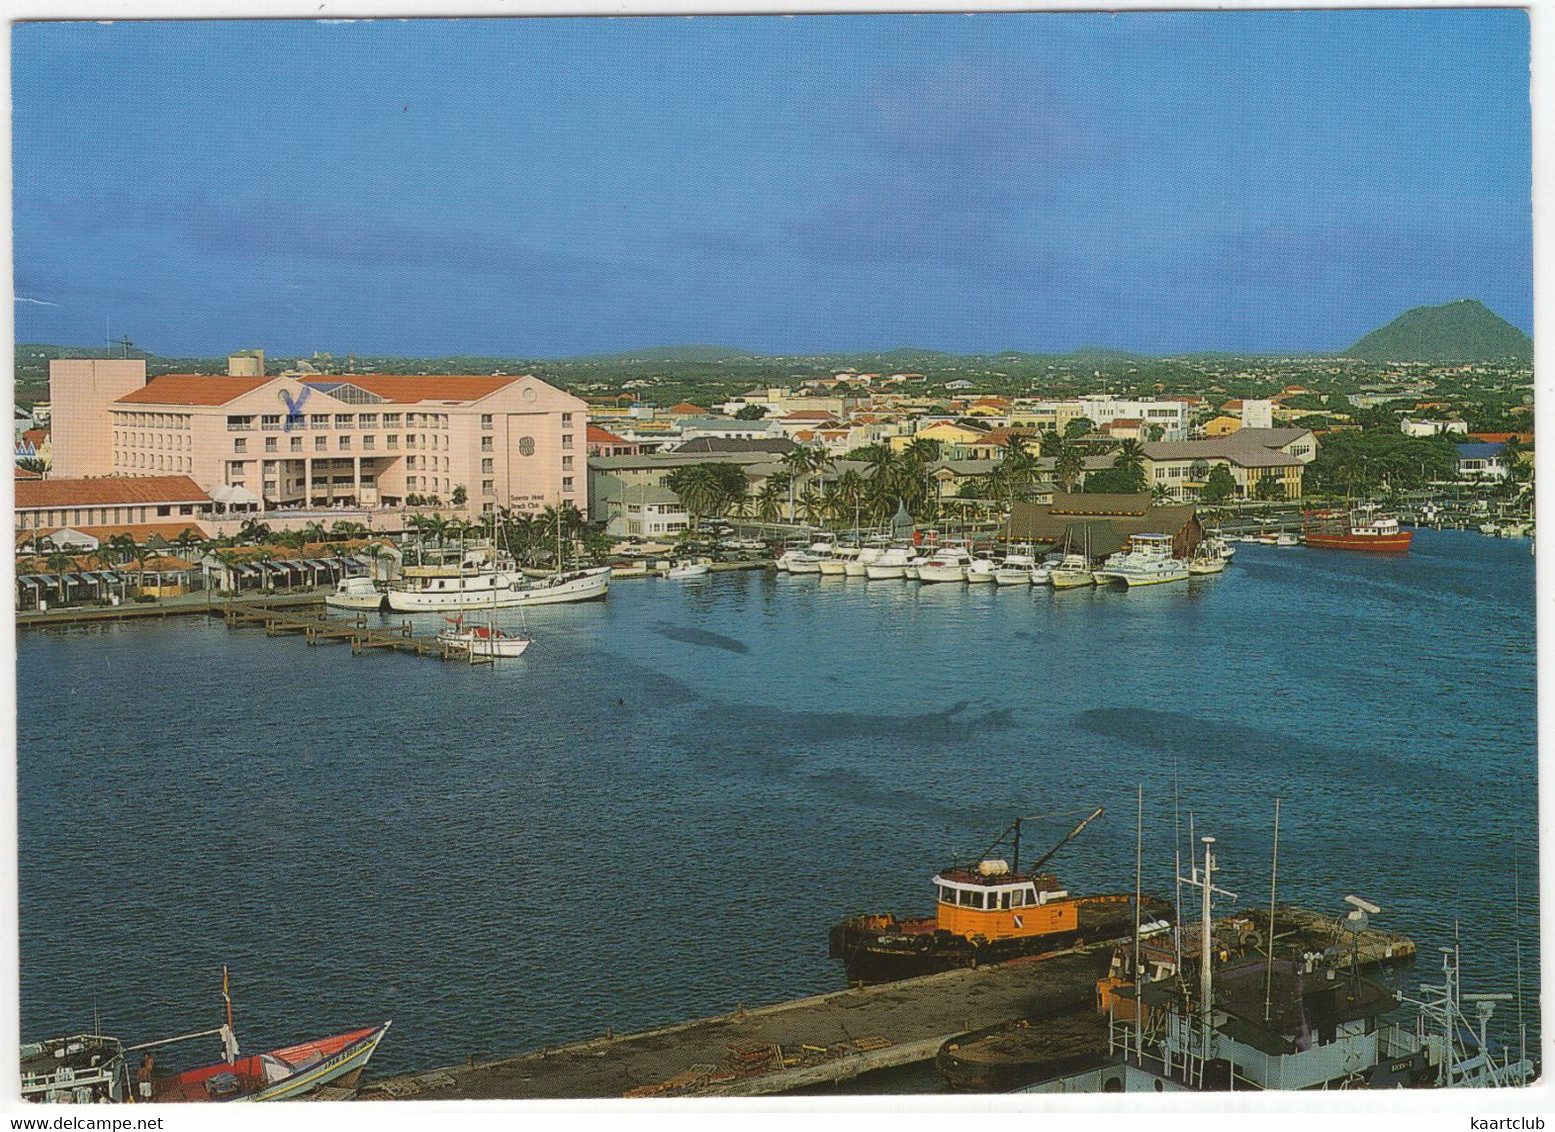 Aruba - Oranjestad At The Harbour Sight With The Sonesta Hotel And The Bali Restaurant - (Antillen) - Boat/Ship - Aruba